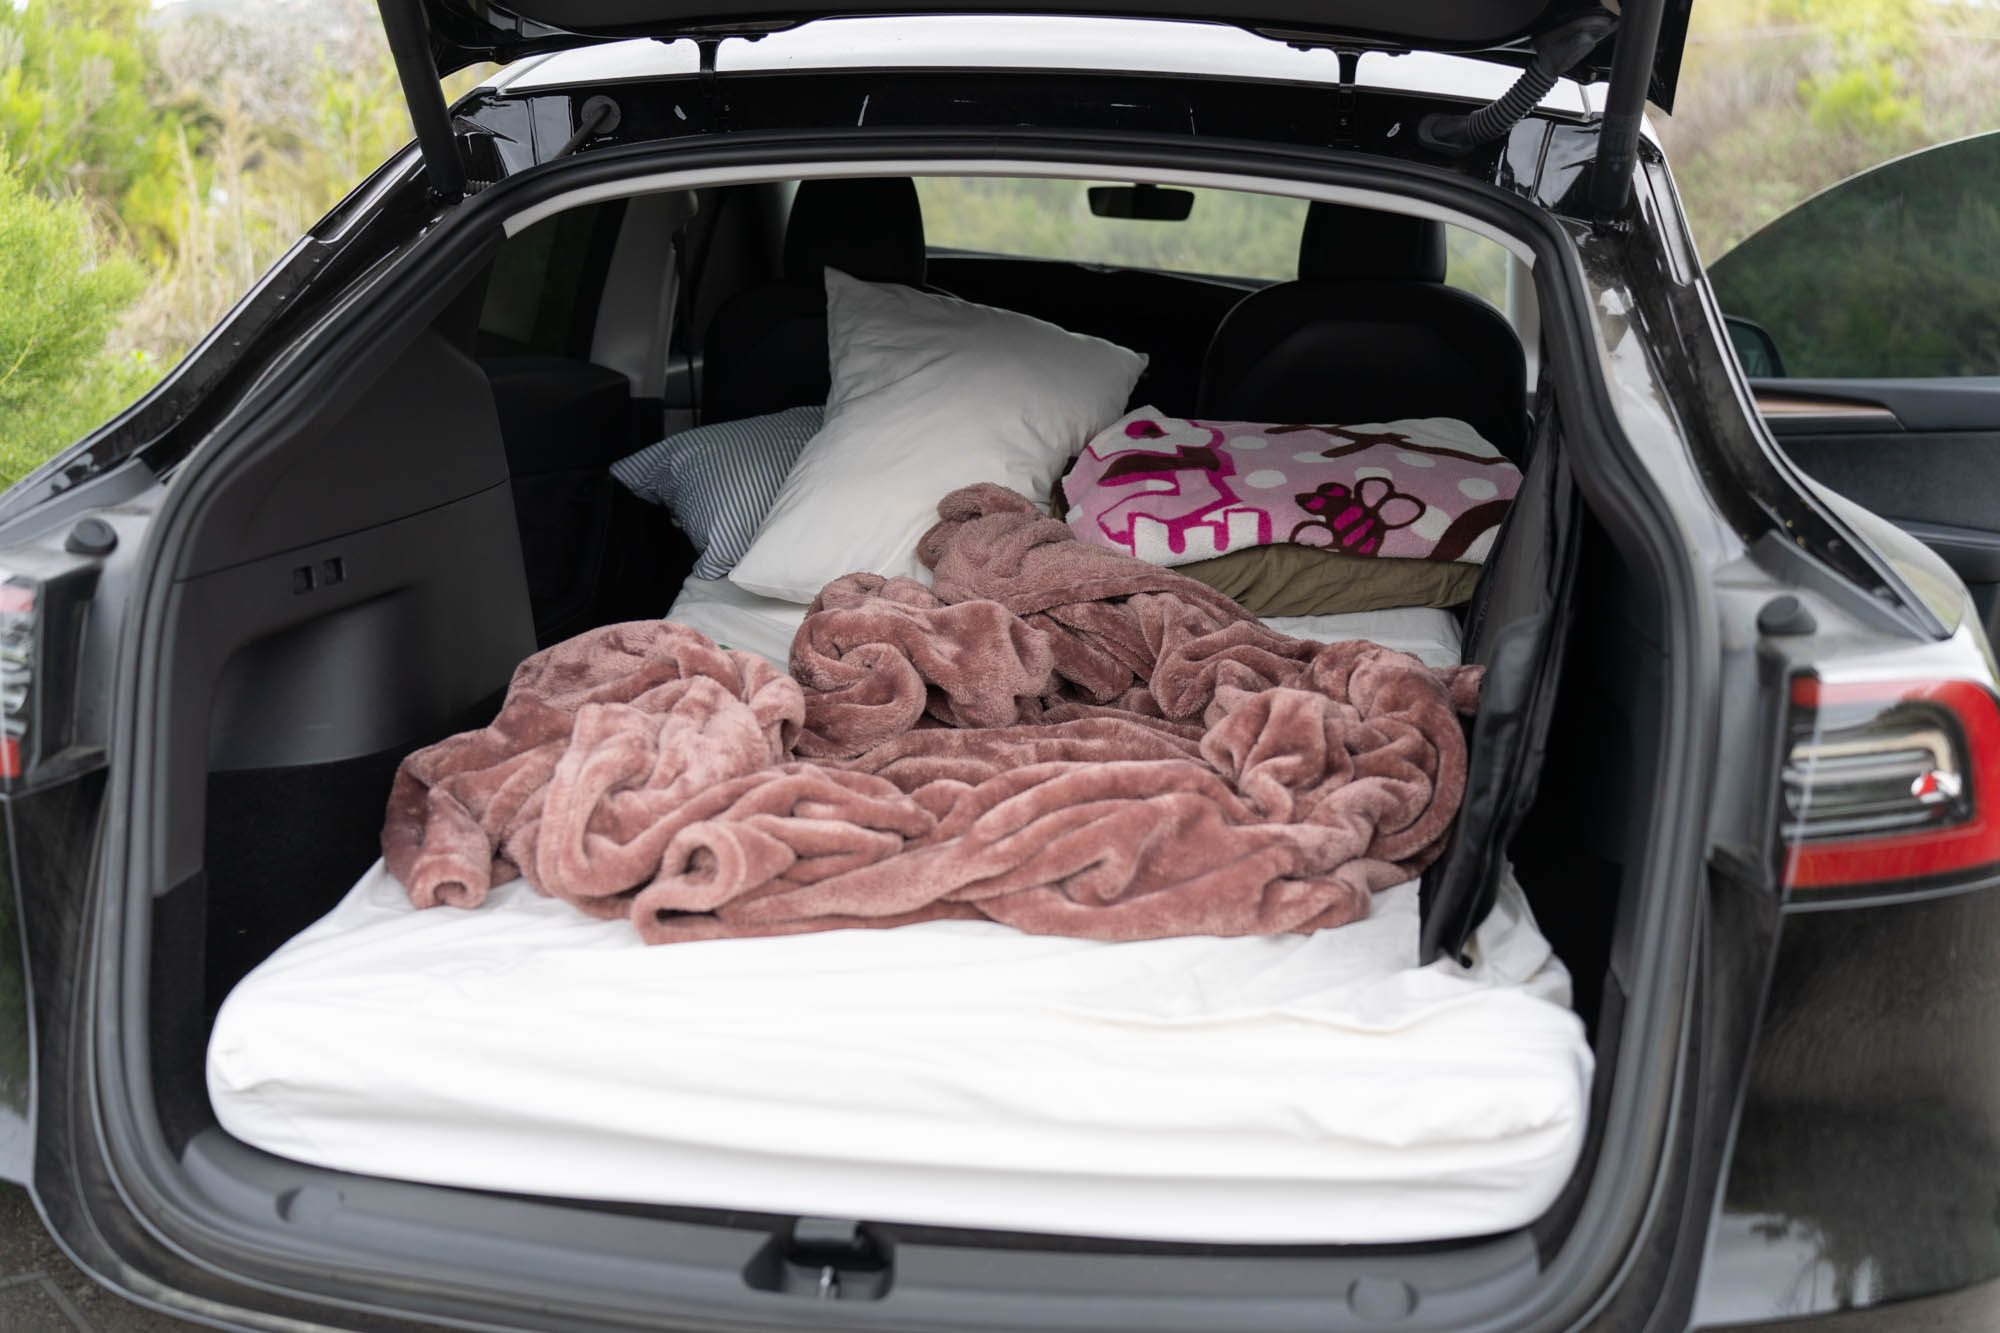 Model Y trunk camping mattress, blankets, pillows